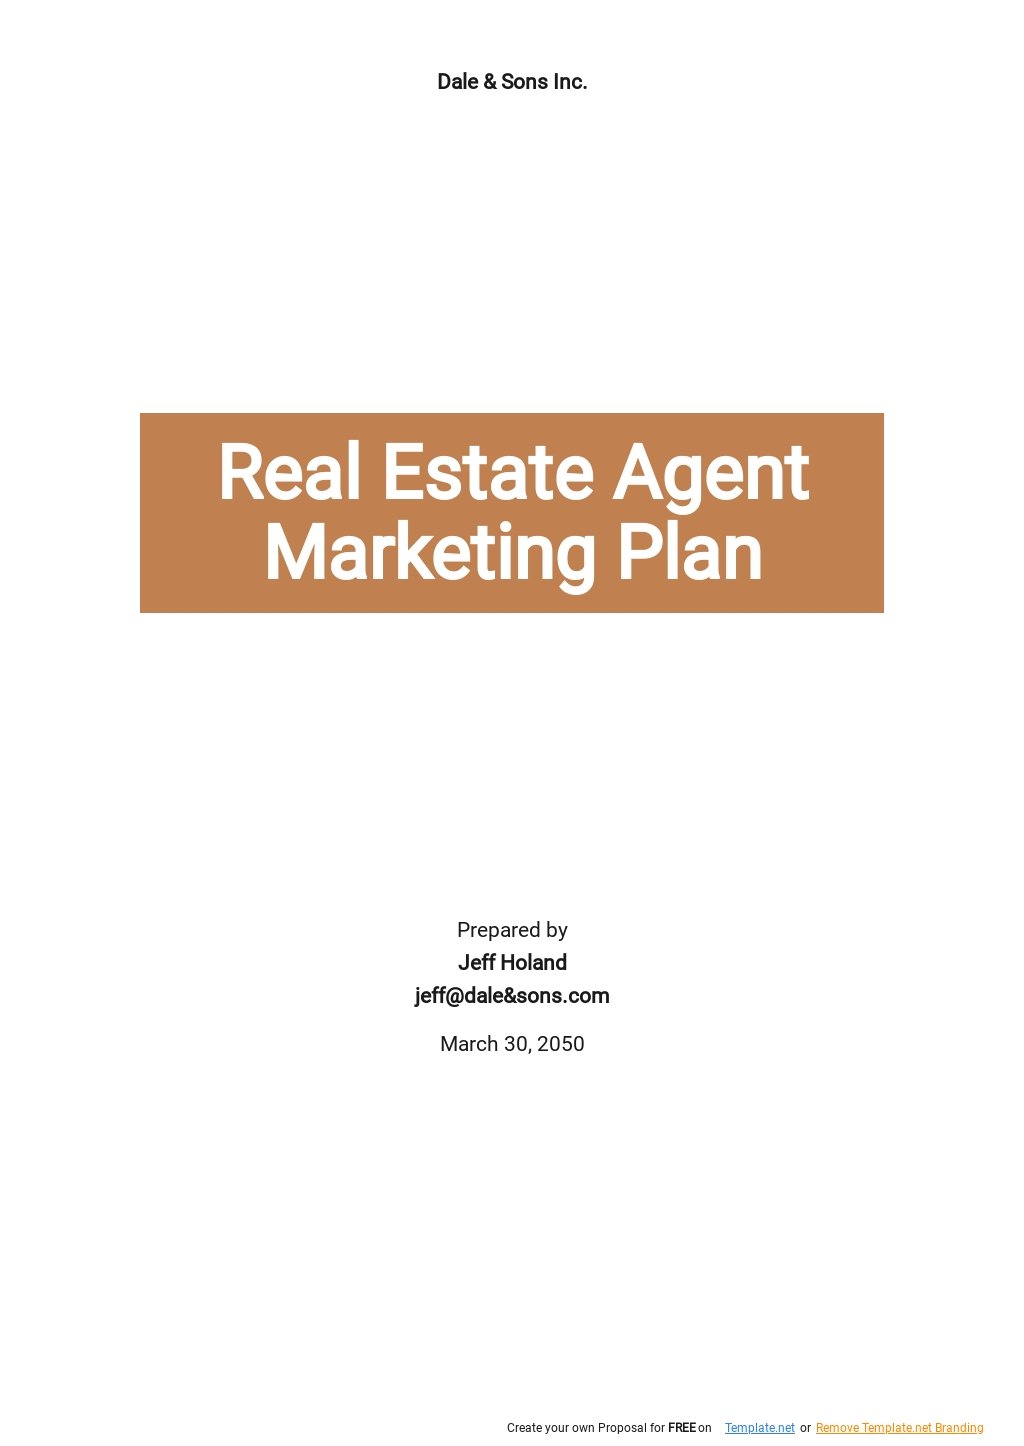 Real Estate Agent Marketing Plan Template.jpe